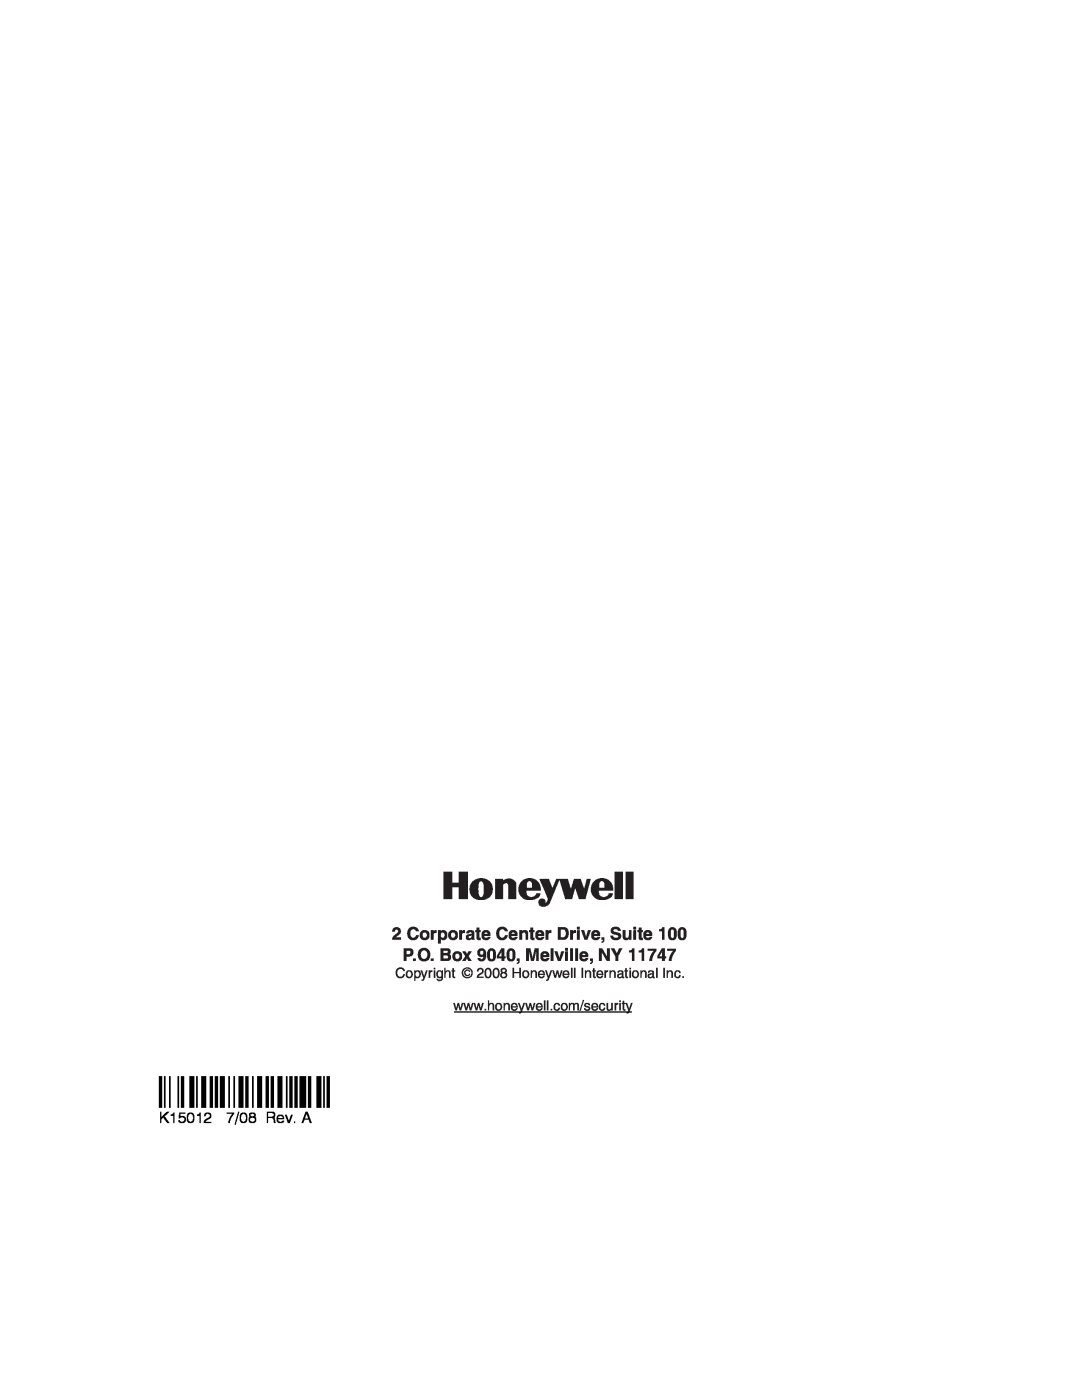 Honeywell LYNXR-2 manual ÊK15012yŠ, Corporate Center Drive, Suite, P.O. Box 9040, Melville, NY 